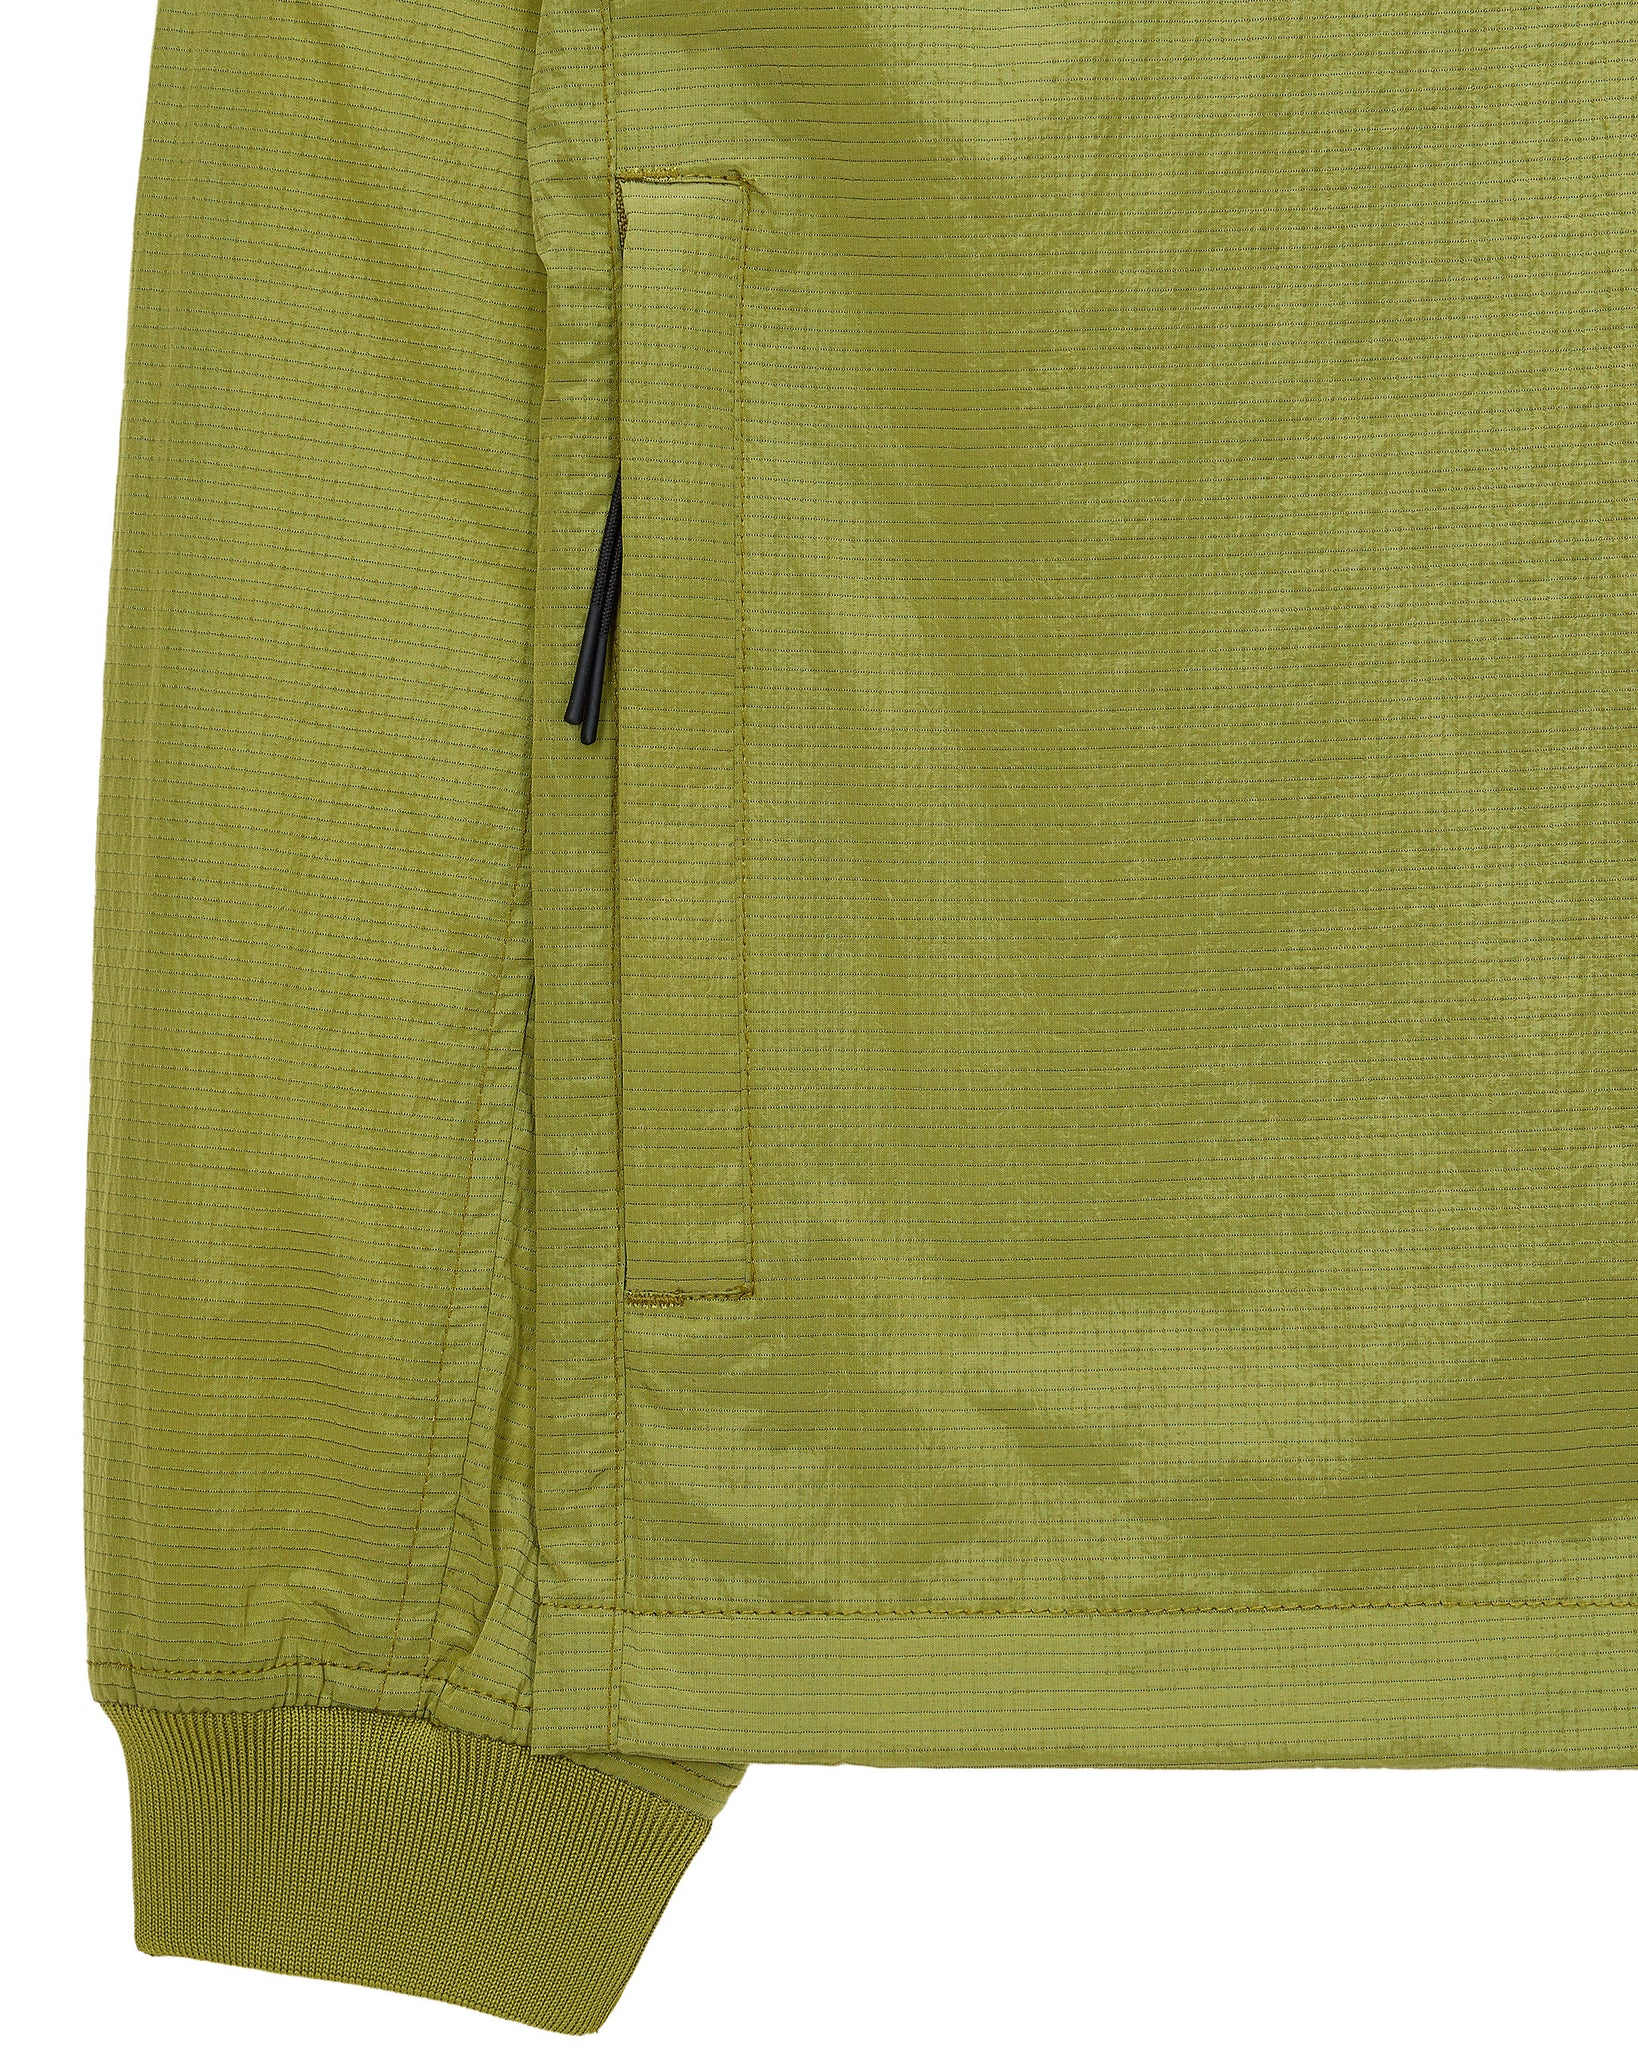 Arapu Over-Shirt Lime Green